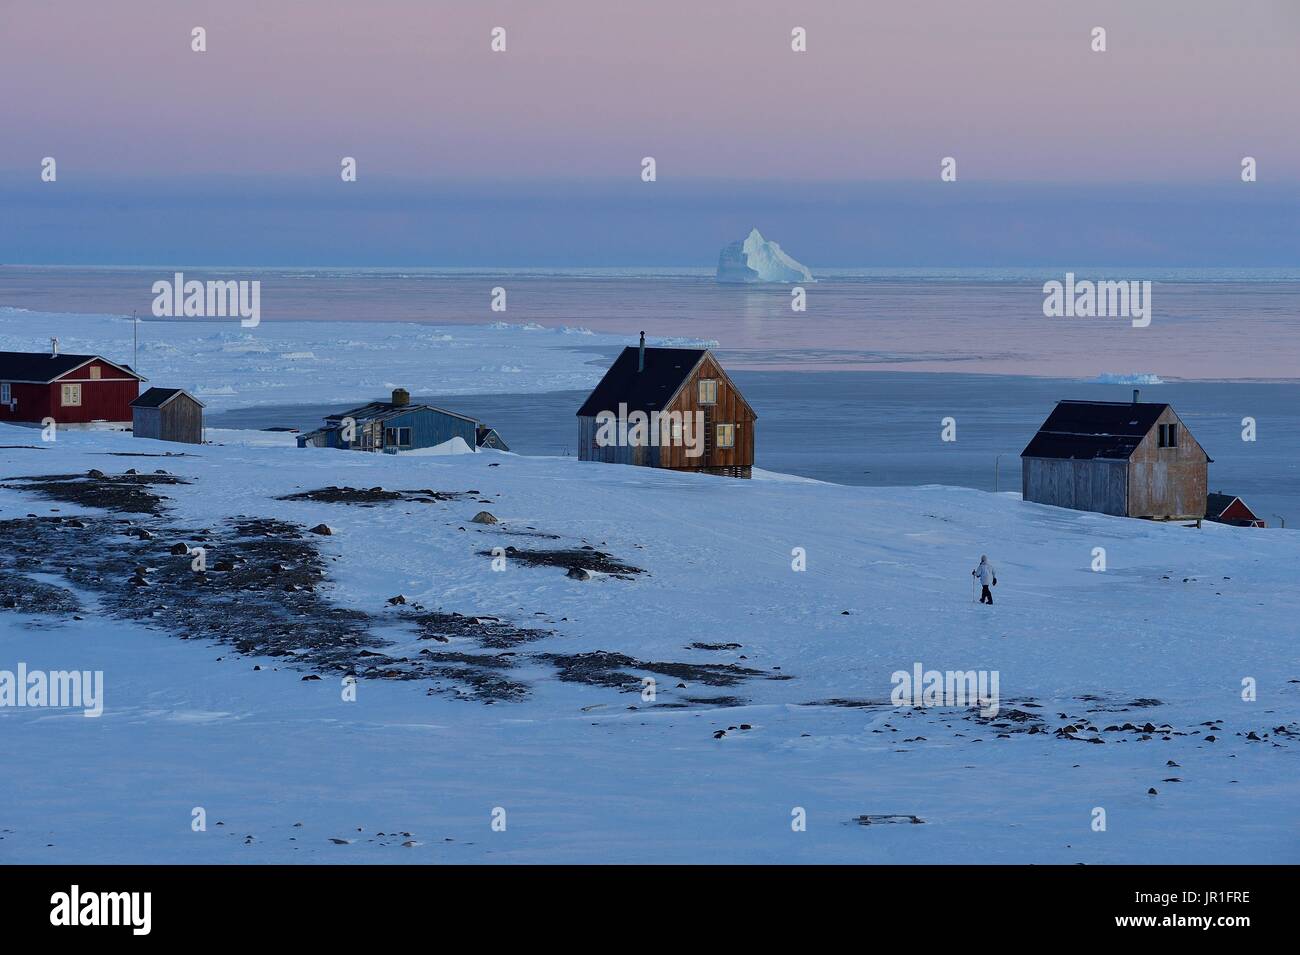 Kap Hope village (Igterajivit), February 2016, the Scoresbysund in the  background, Greenland Stock Photo - Alamy